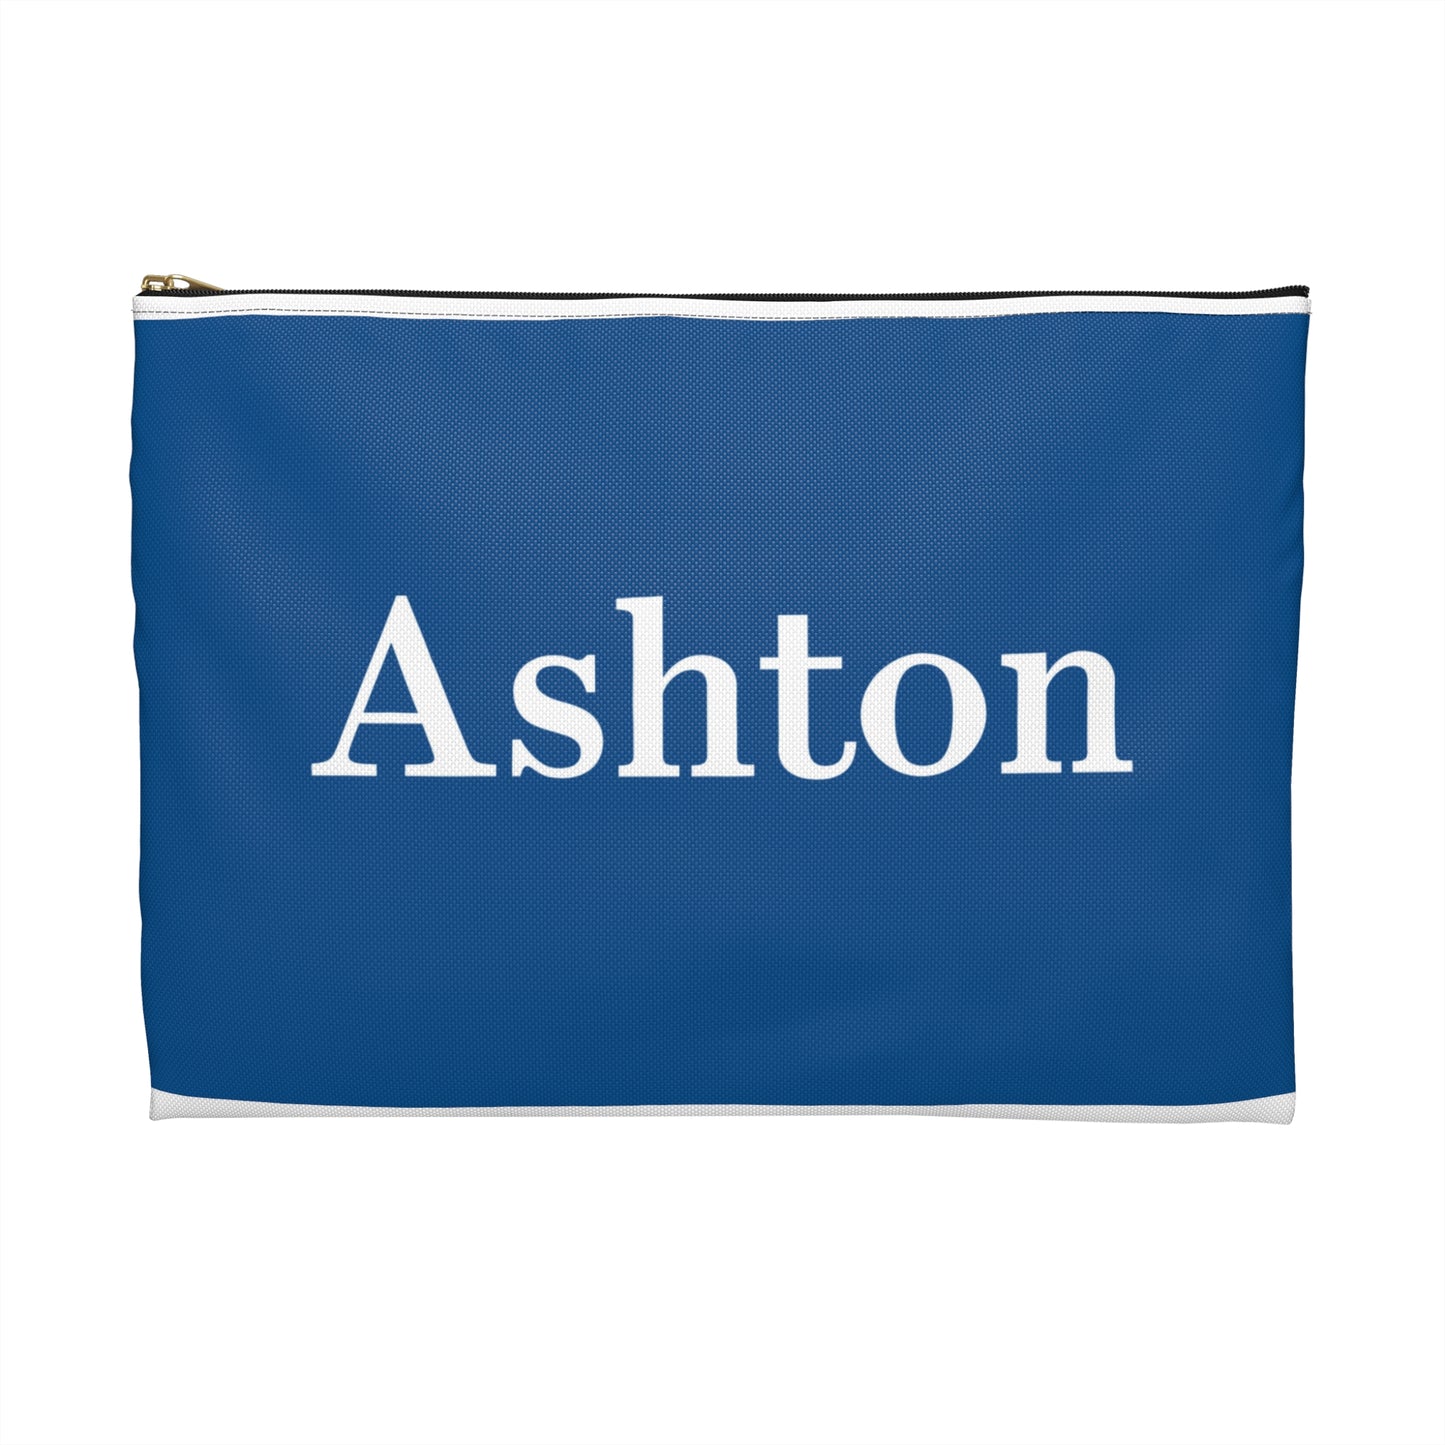 Ashton Accessory Pouch